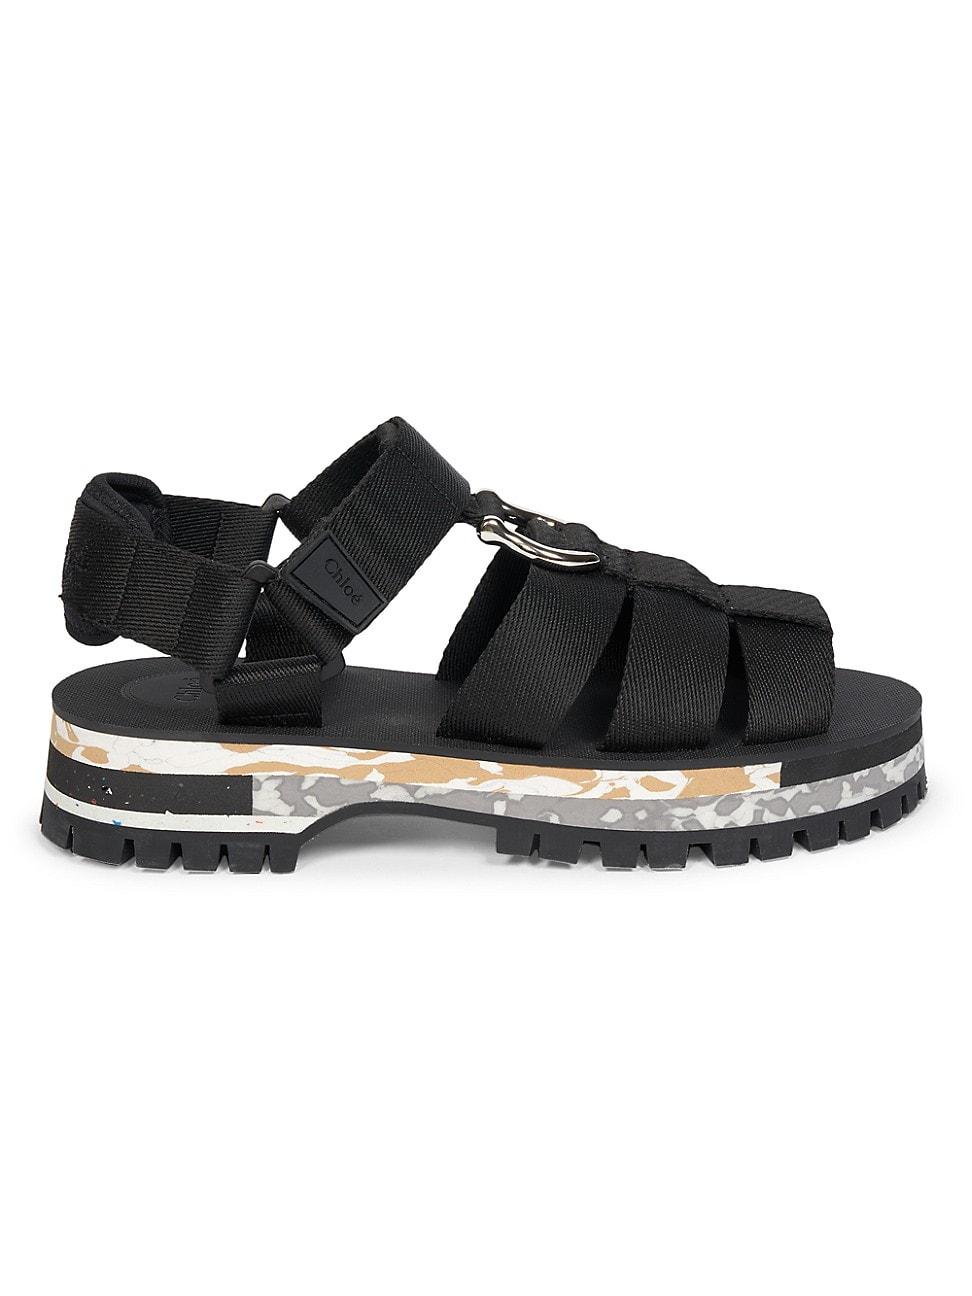 Chloé Nama Caged Flatform Sandals in Black | Lyst